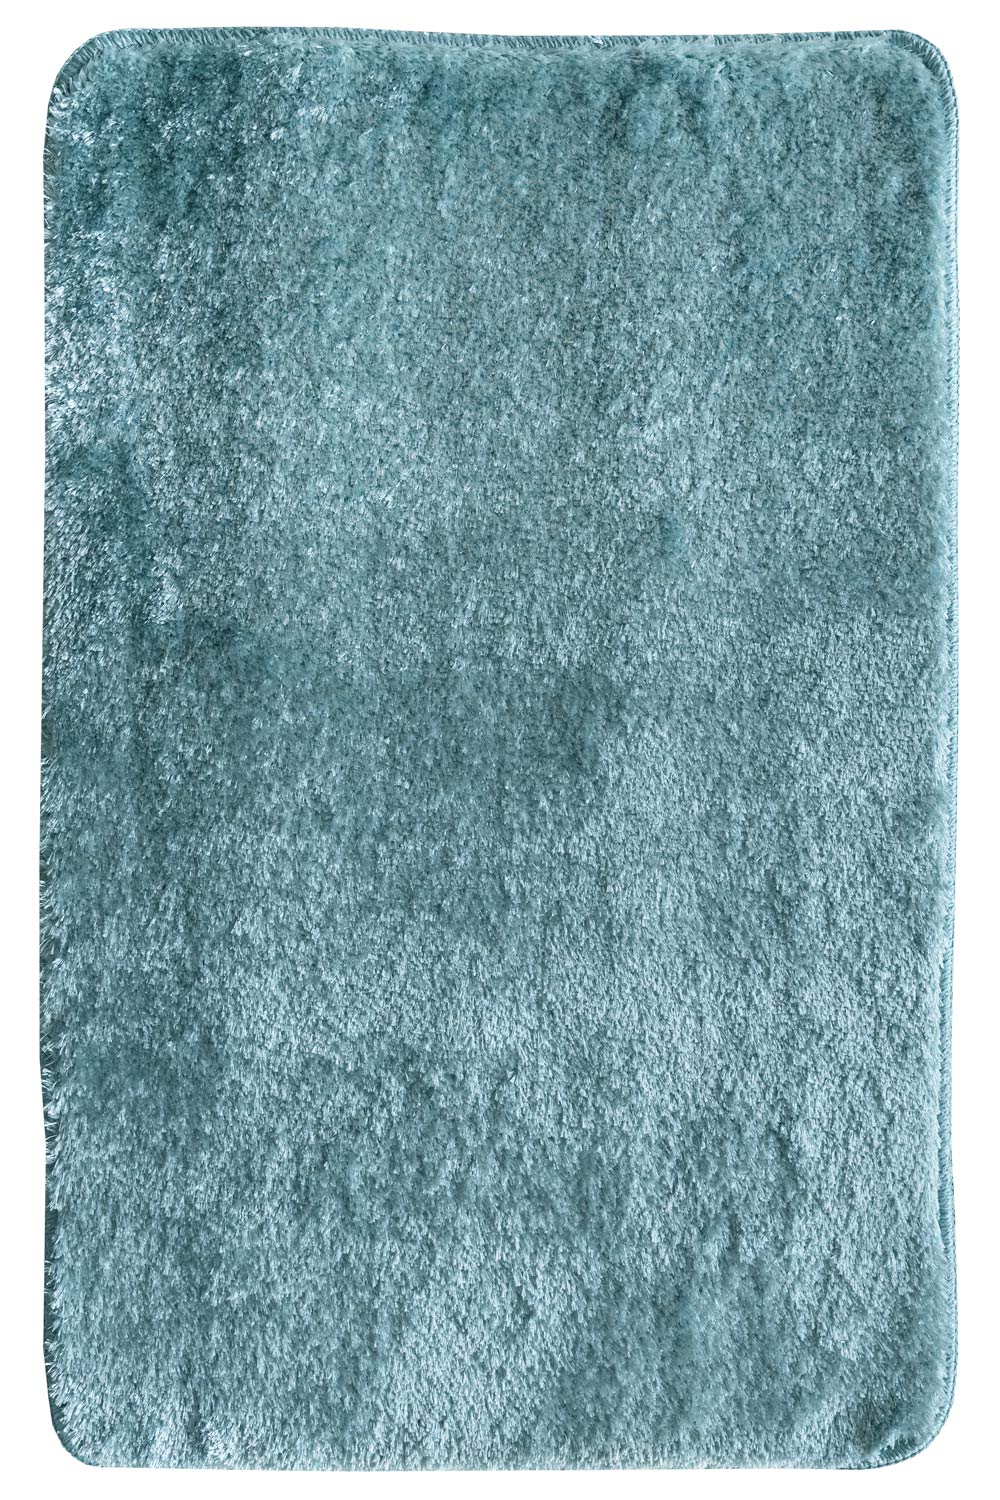 Koupelnová předložka SANTA/NORVOS - Turquoise 60x100 cm